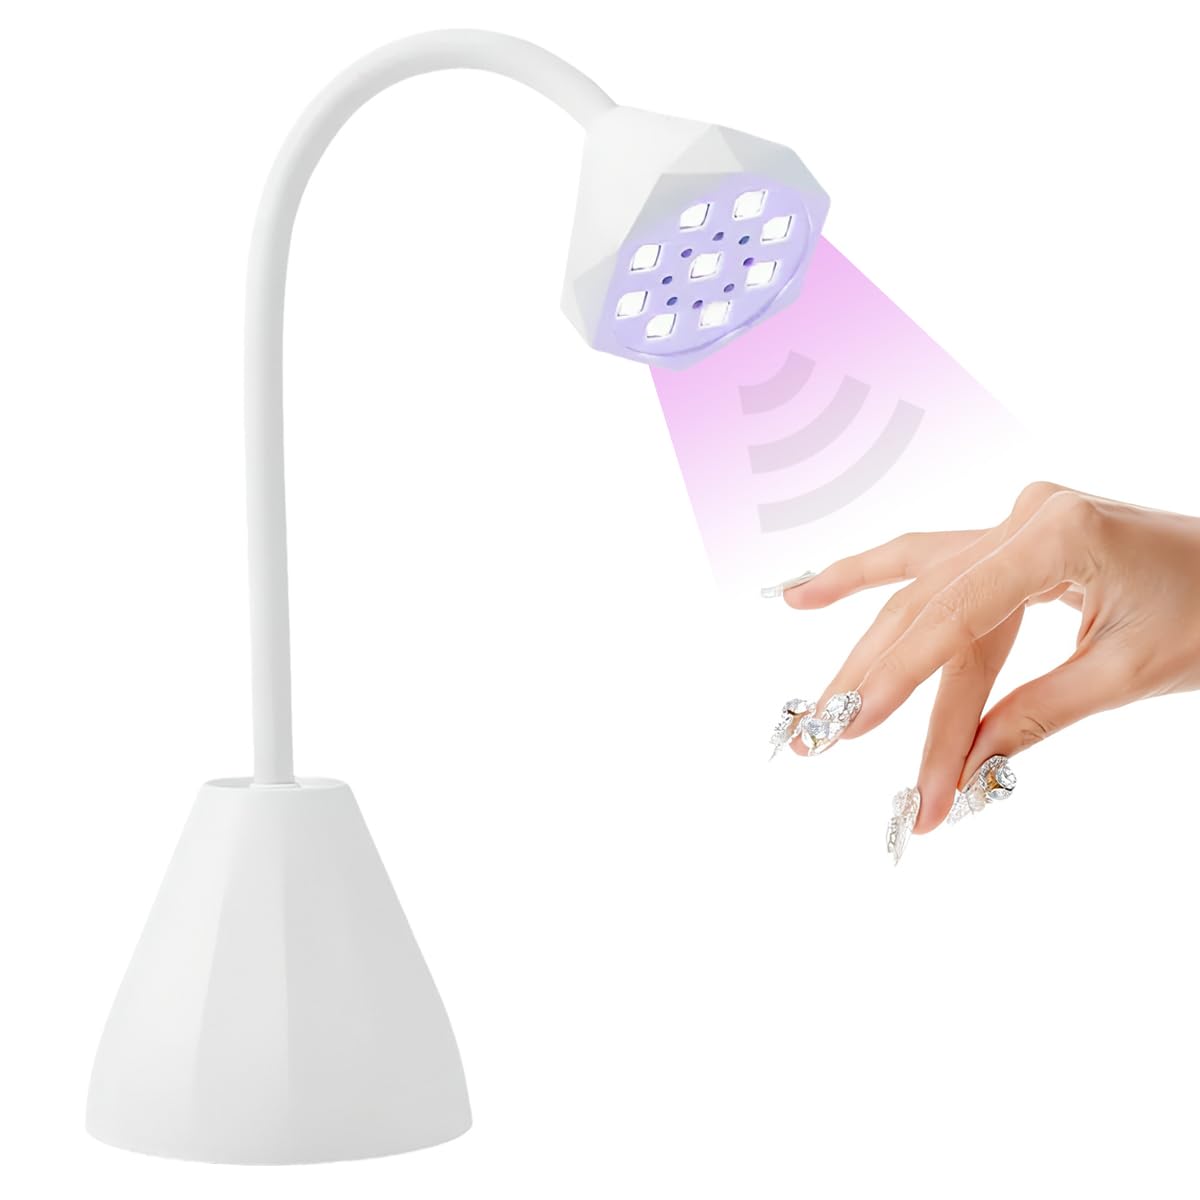 Smart UV LED Nail Dryer - Diamond Shaped - UV Nail Art - Portable, Rechargeable, Rotatable